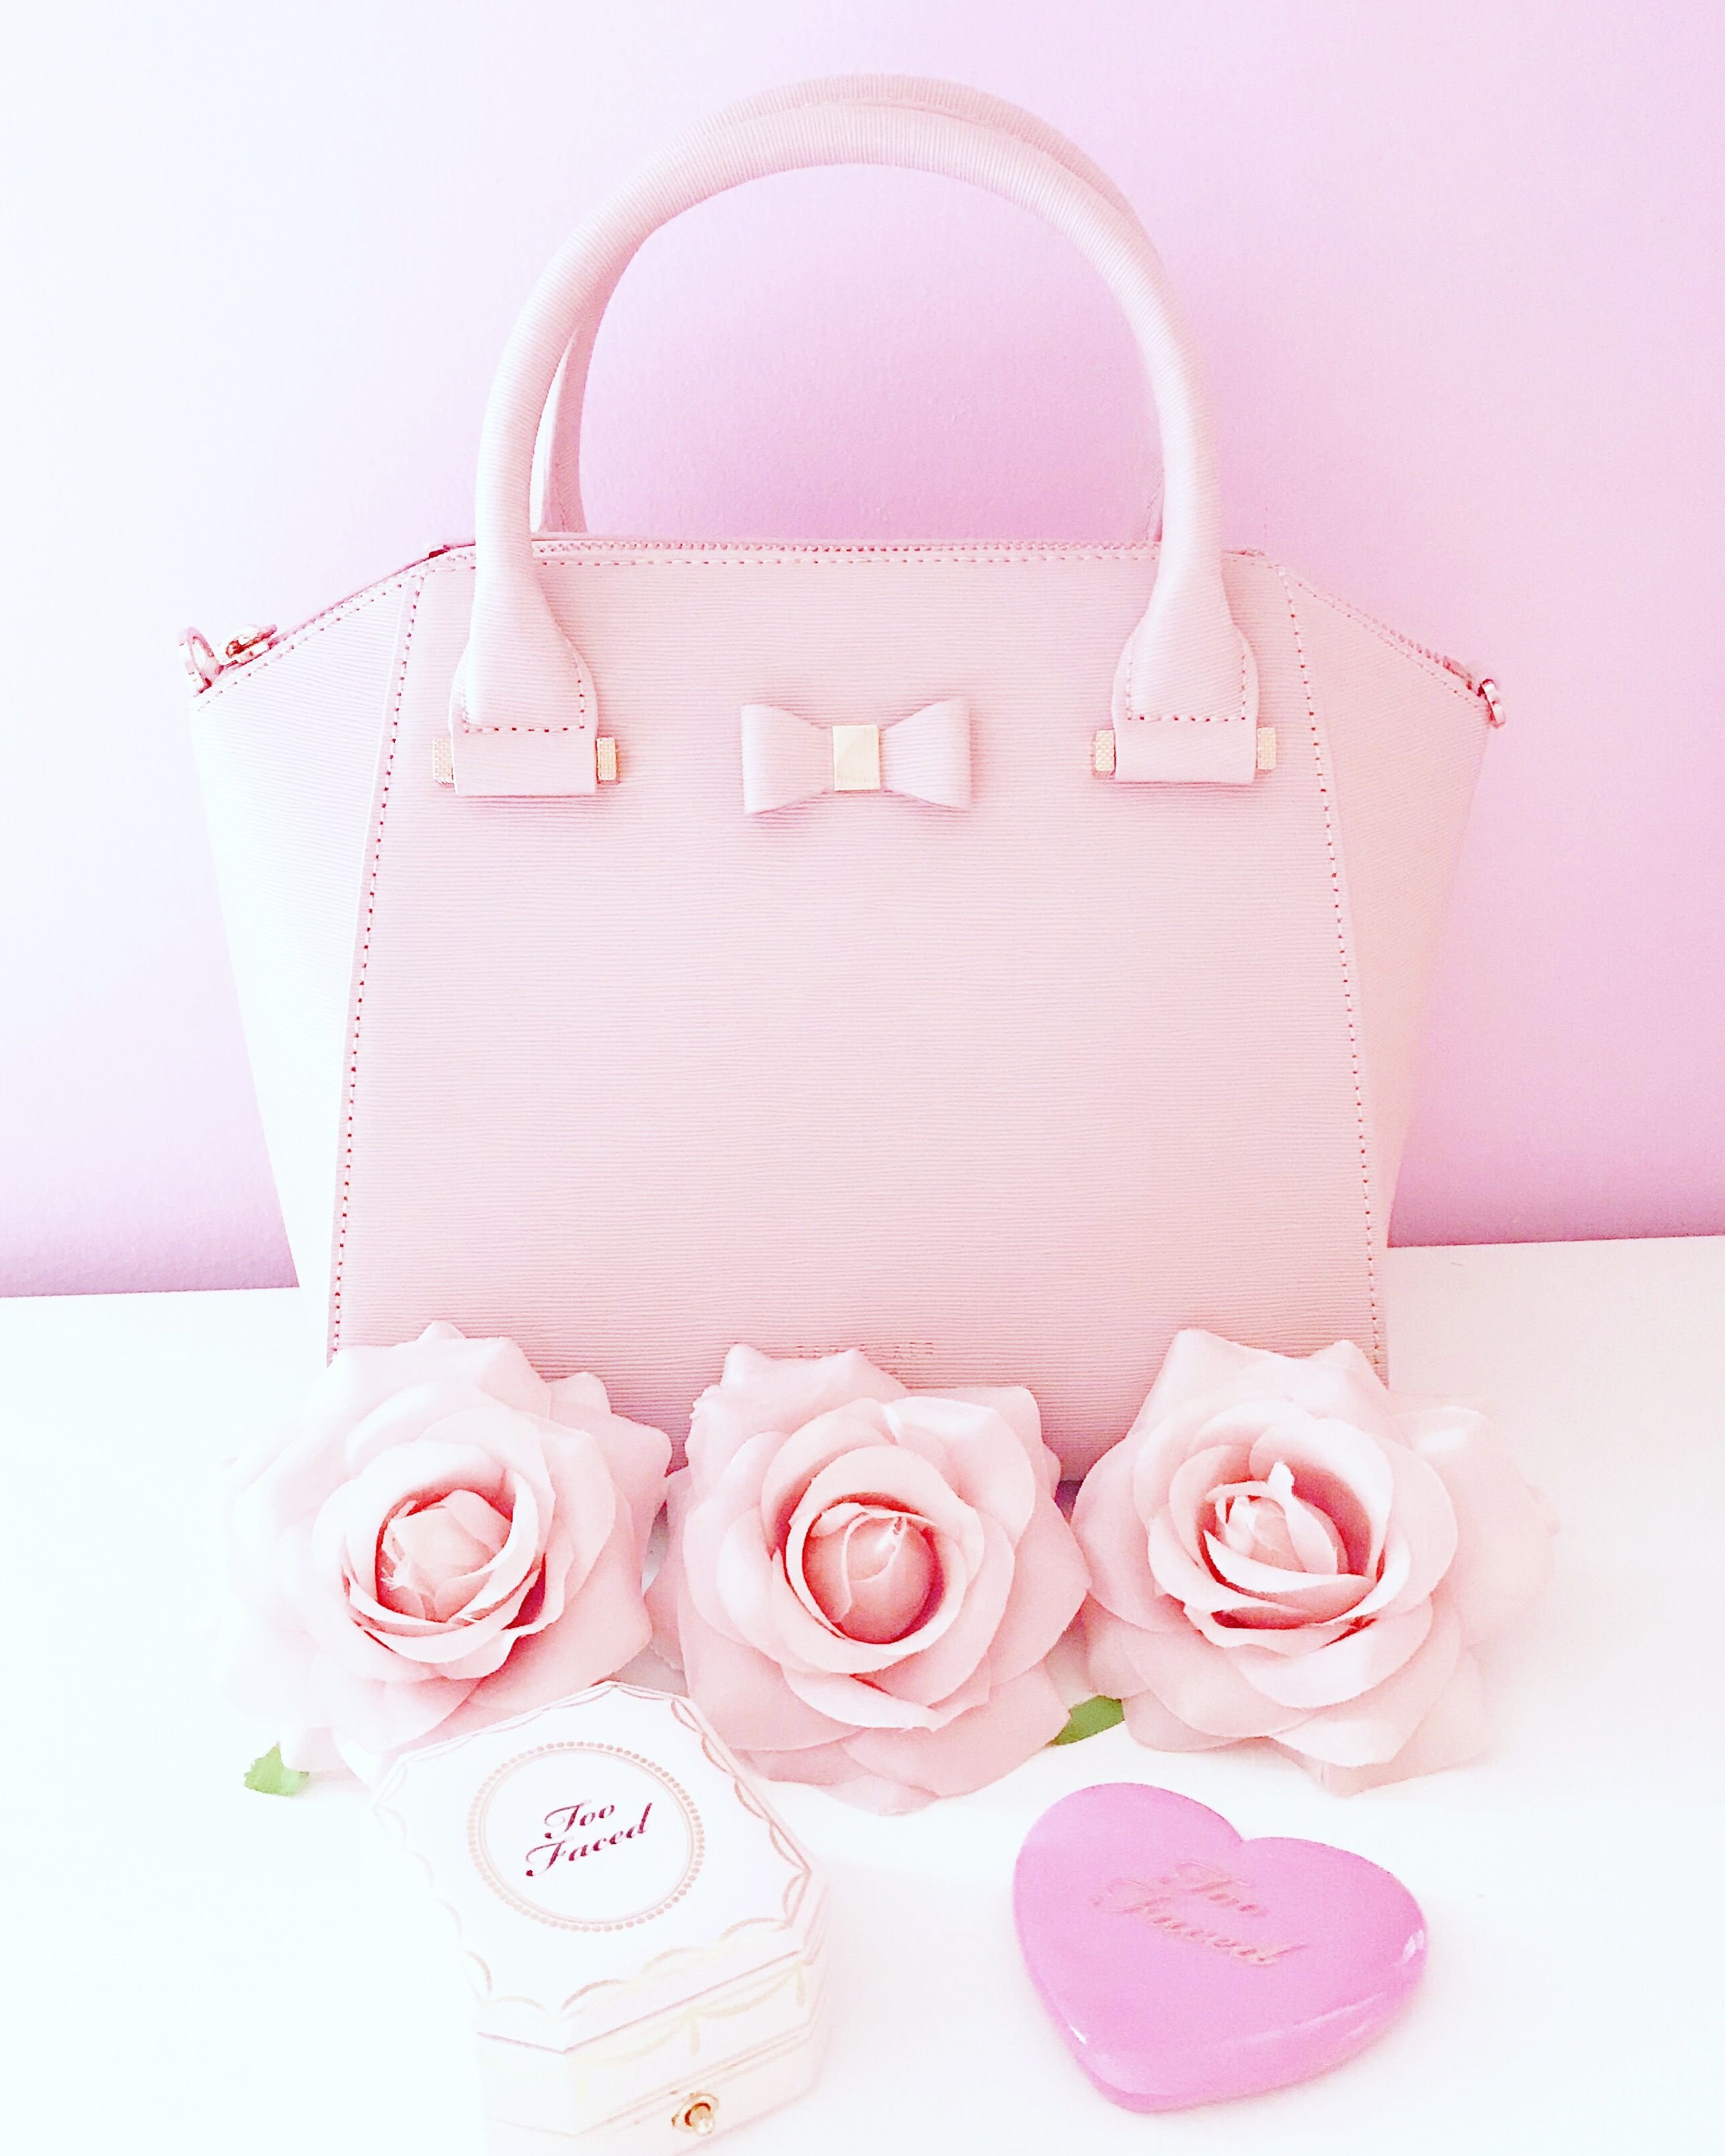 Розовый sale111121 цена. Ted Baker сумка розовая. Пинк сумки 2023. Розовая сумочка. Красивые сумки для девушек.